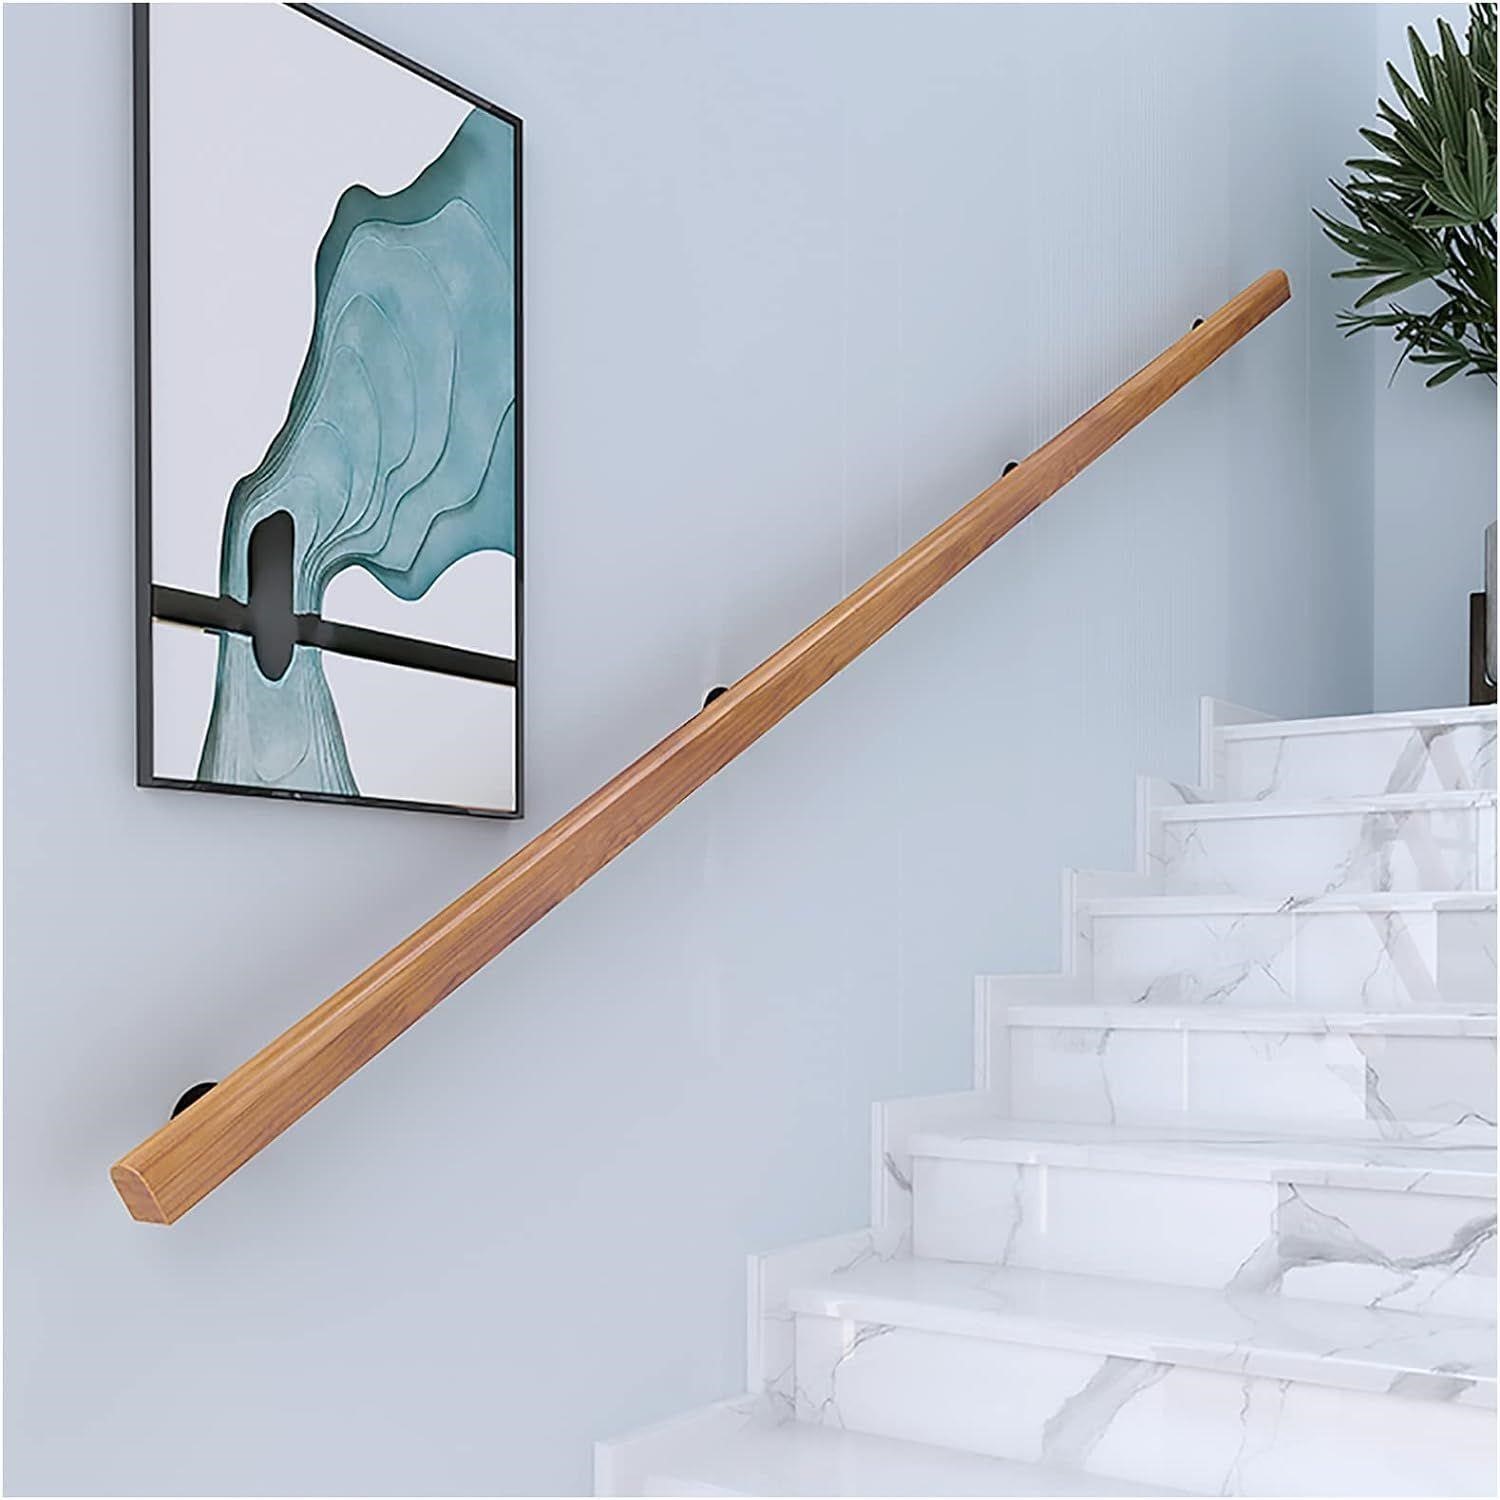 7' Non-Slip Wooden Staircase Handrail